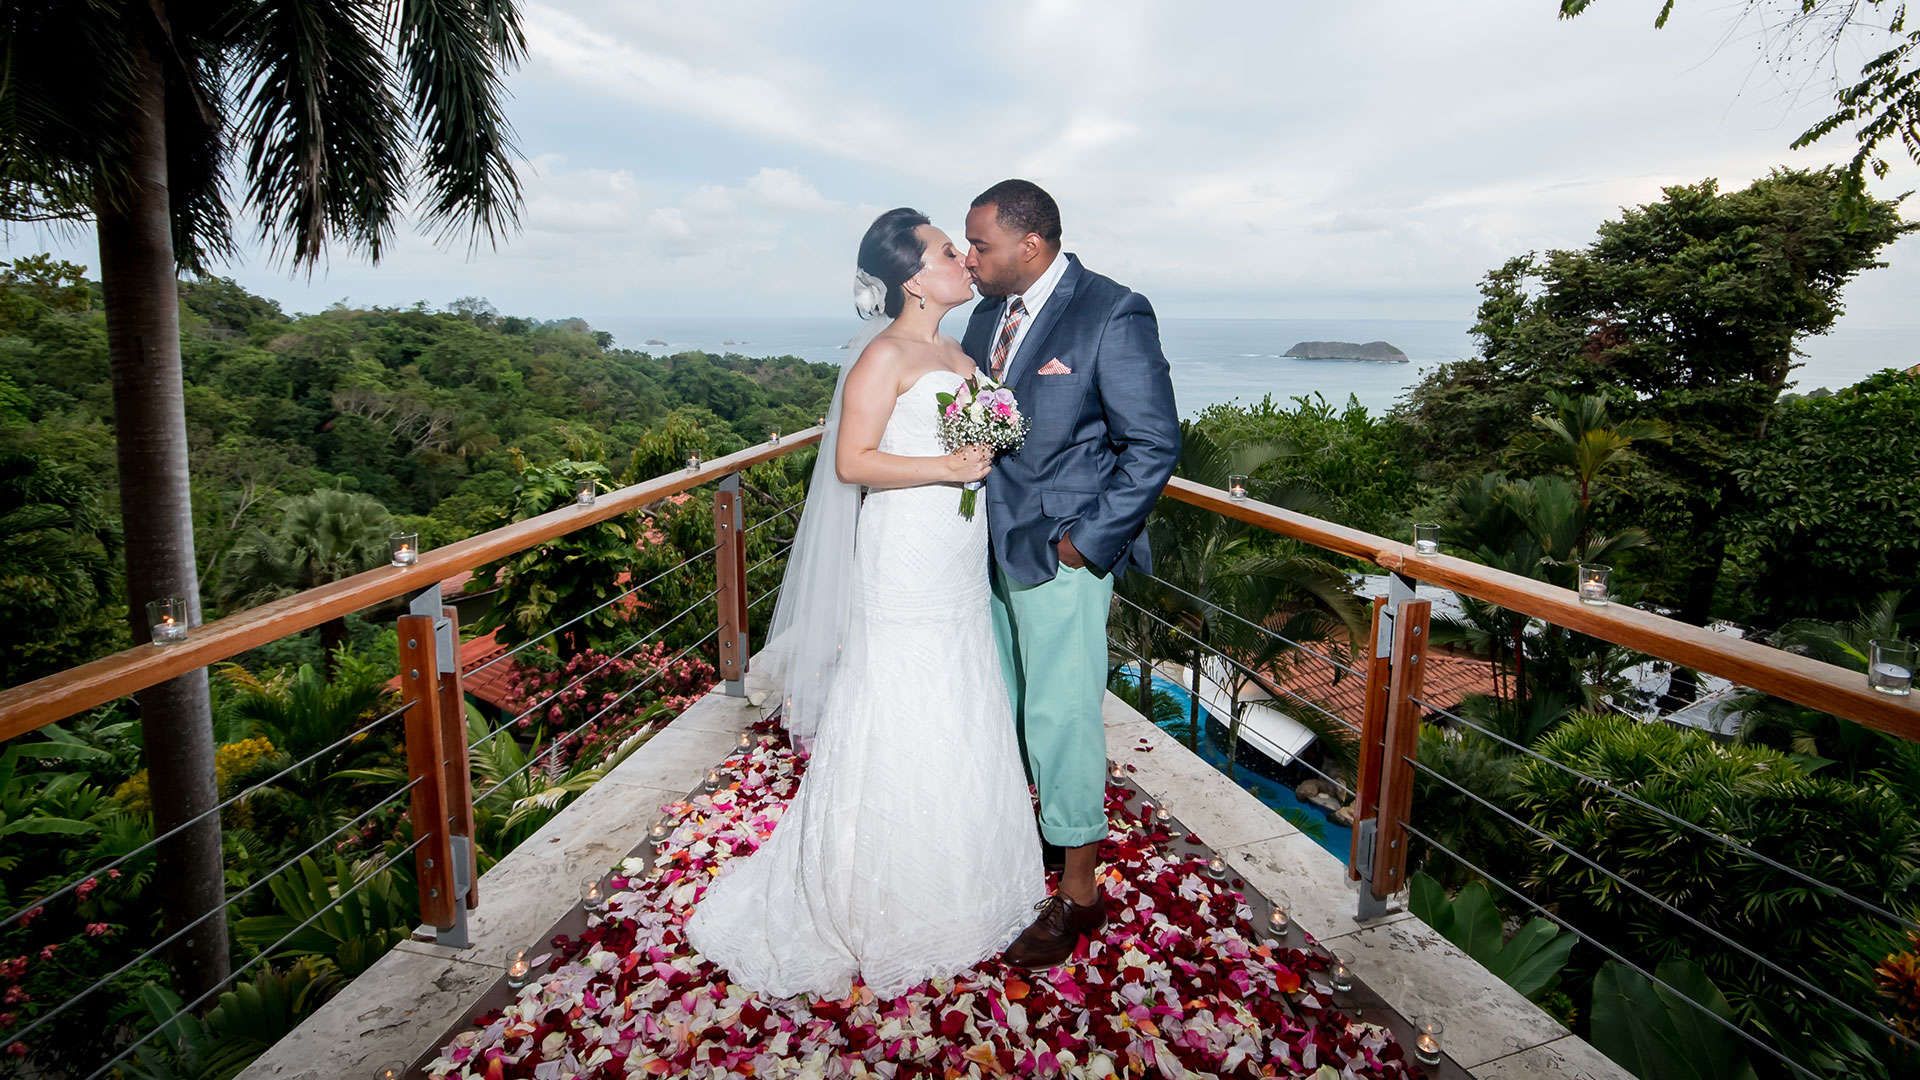 Costa rica honeymoon wedding packages greentique